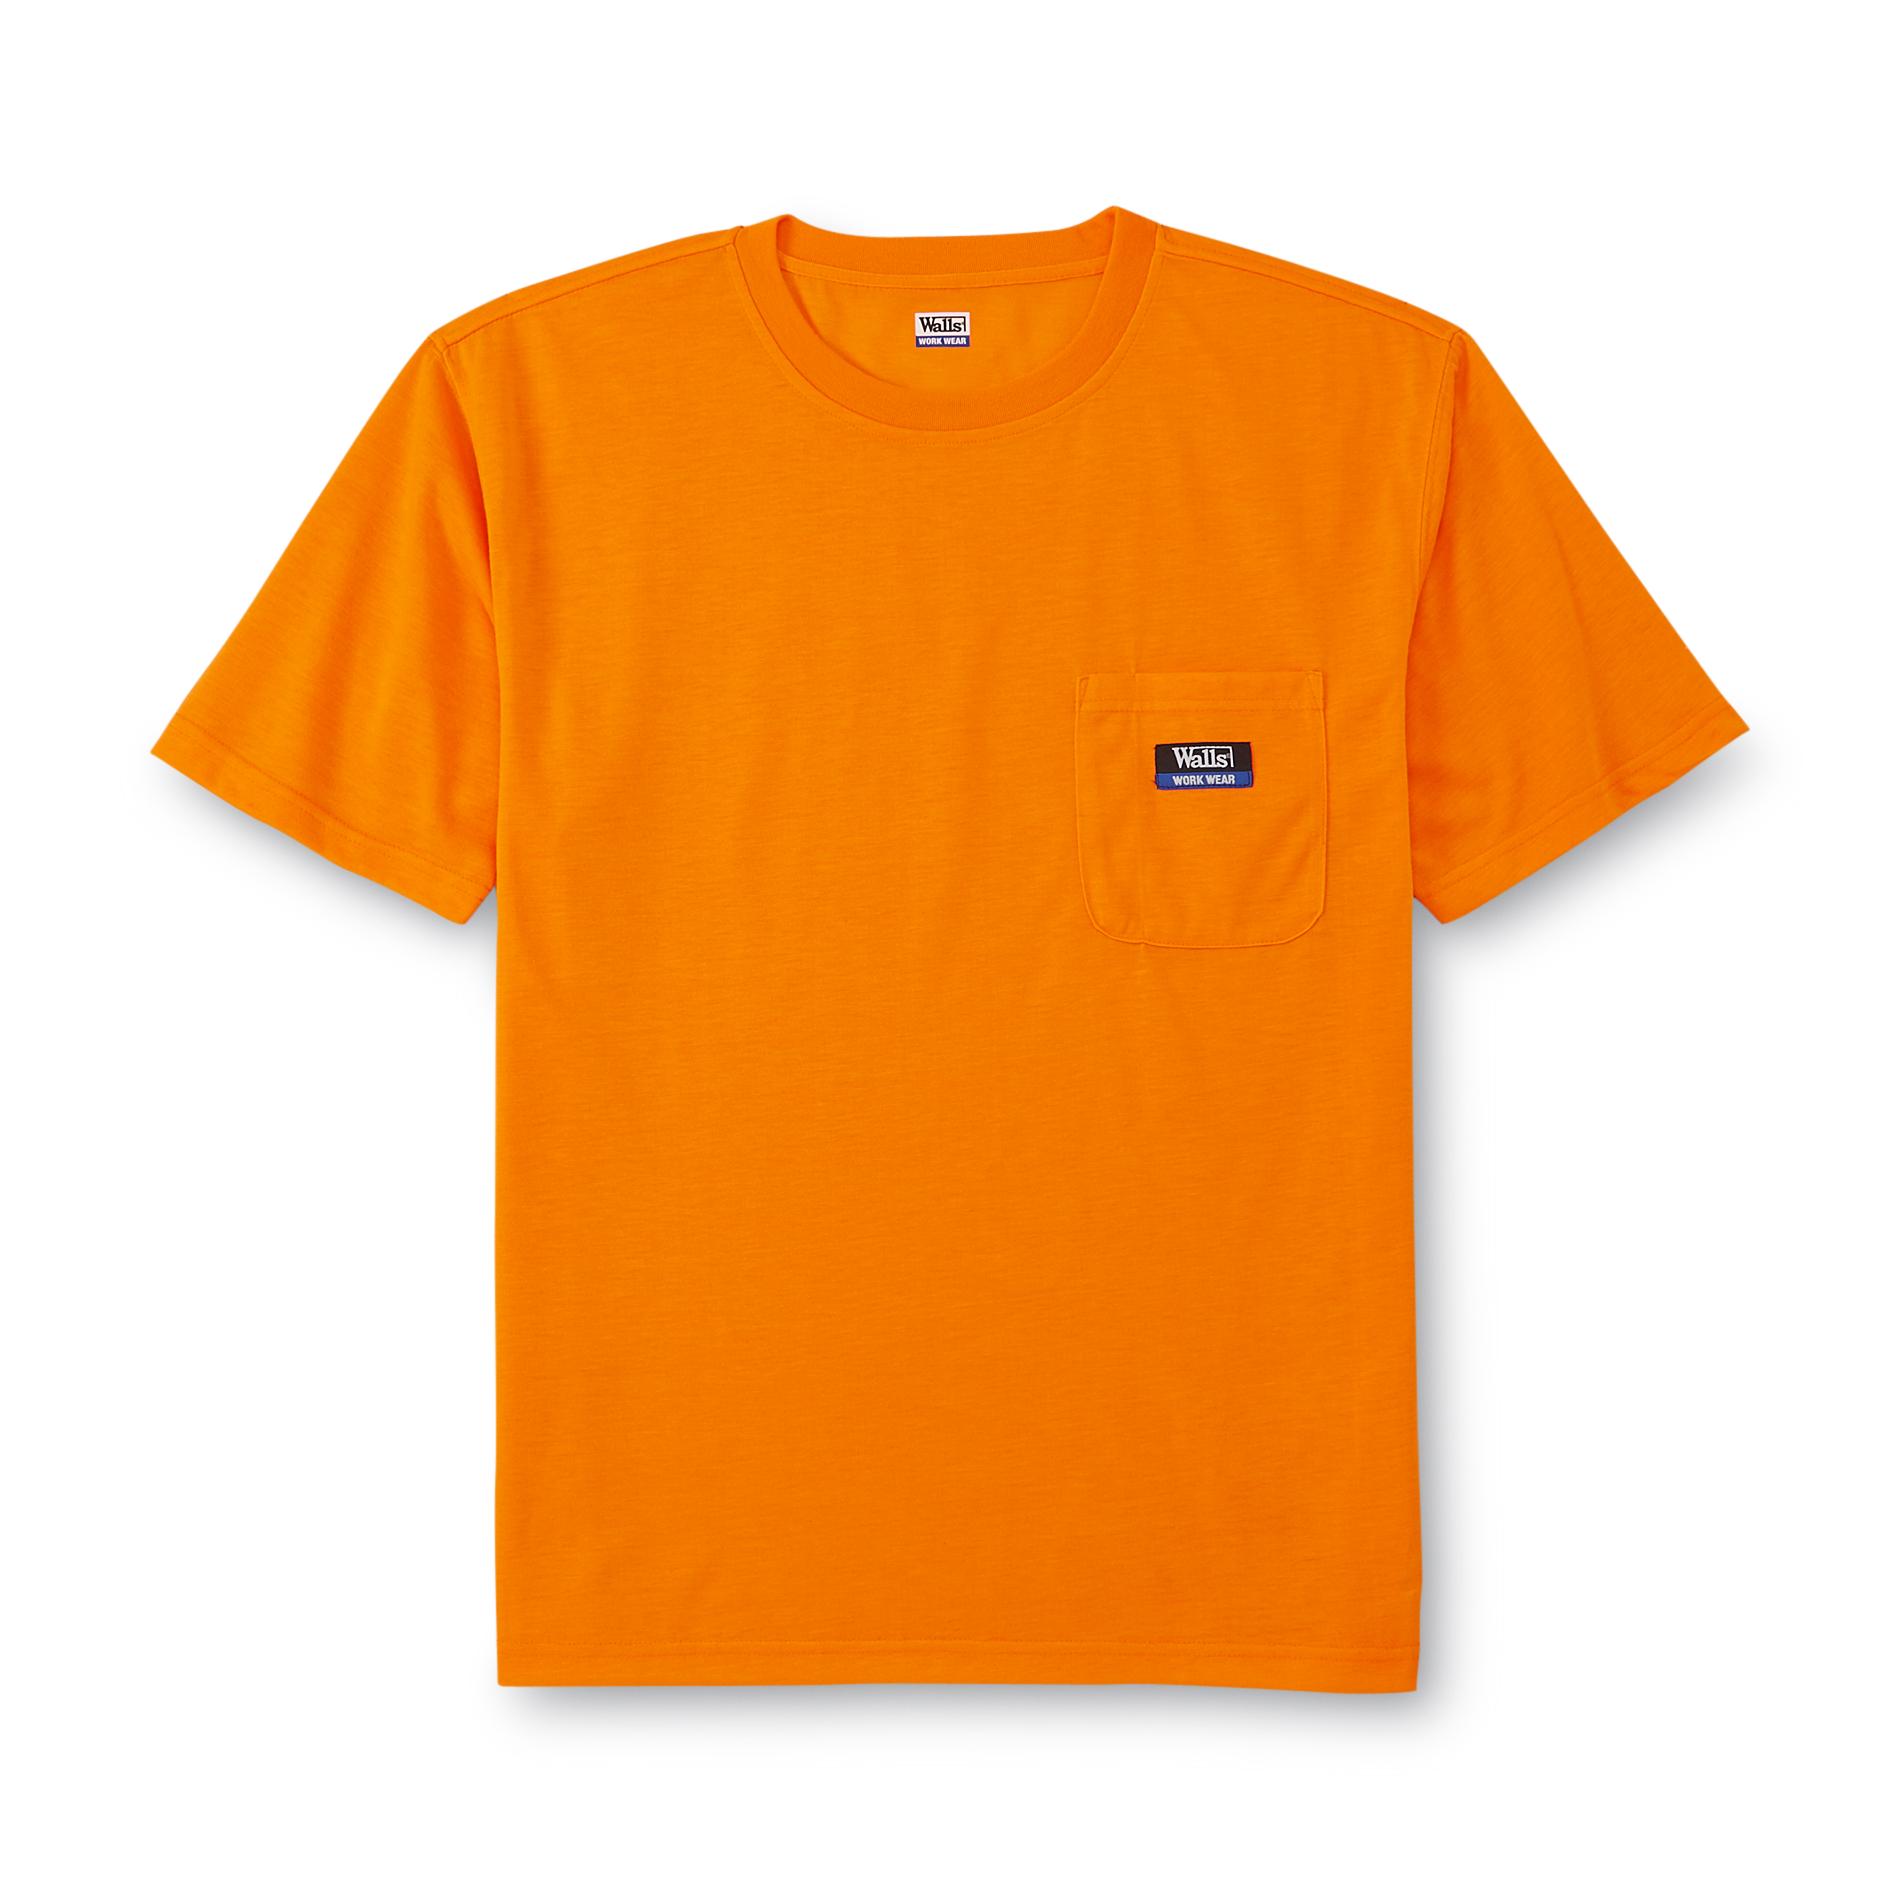 Walls Men's High-Visibility Safety T-Shirt